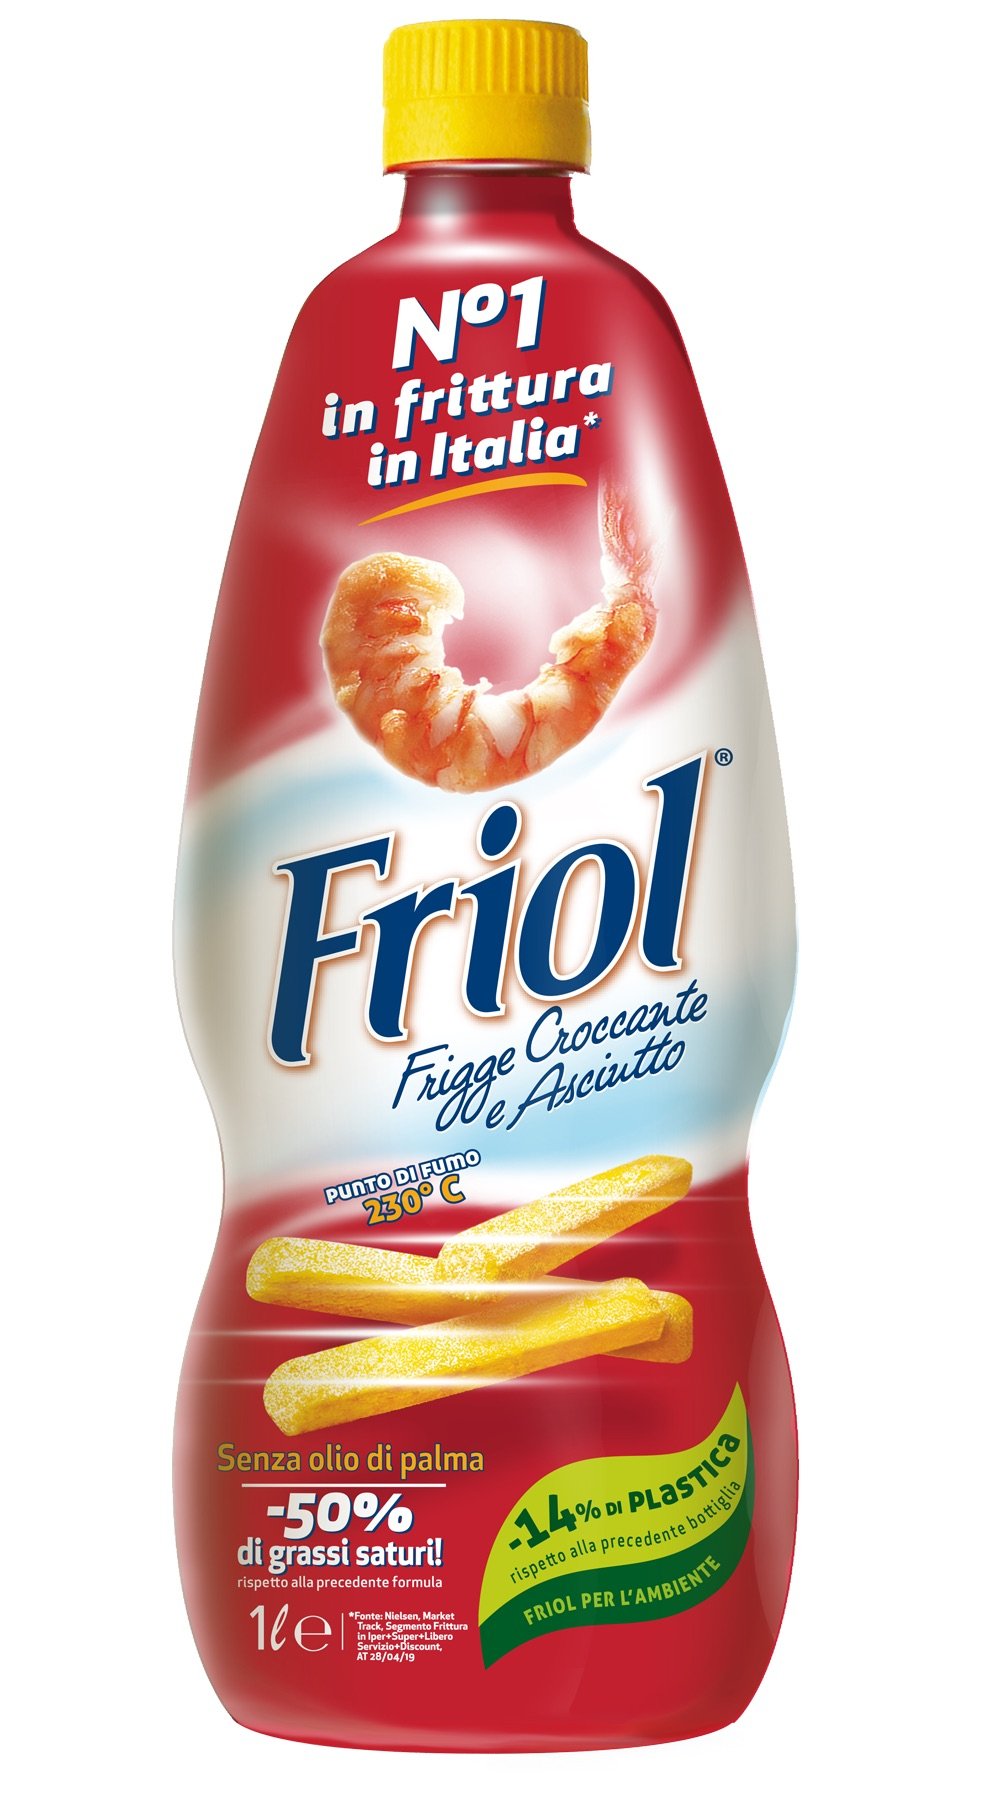 Un nuovo packaging per Friol